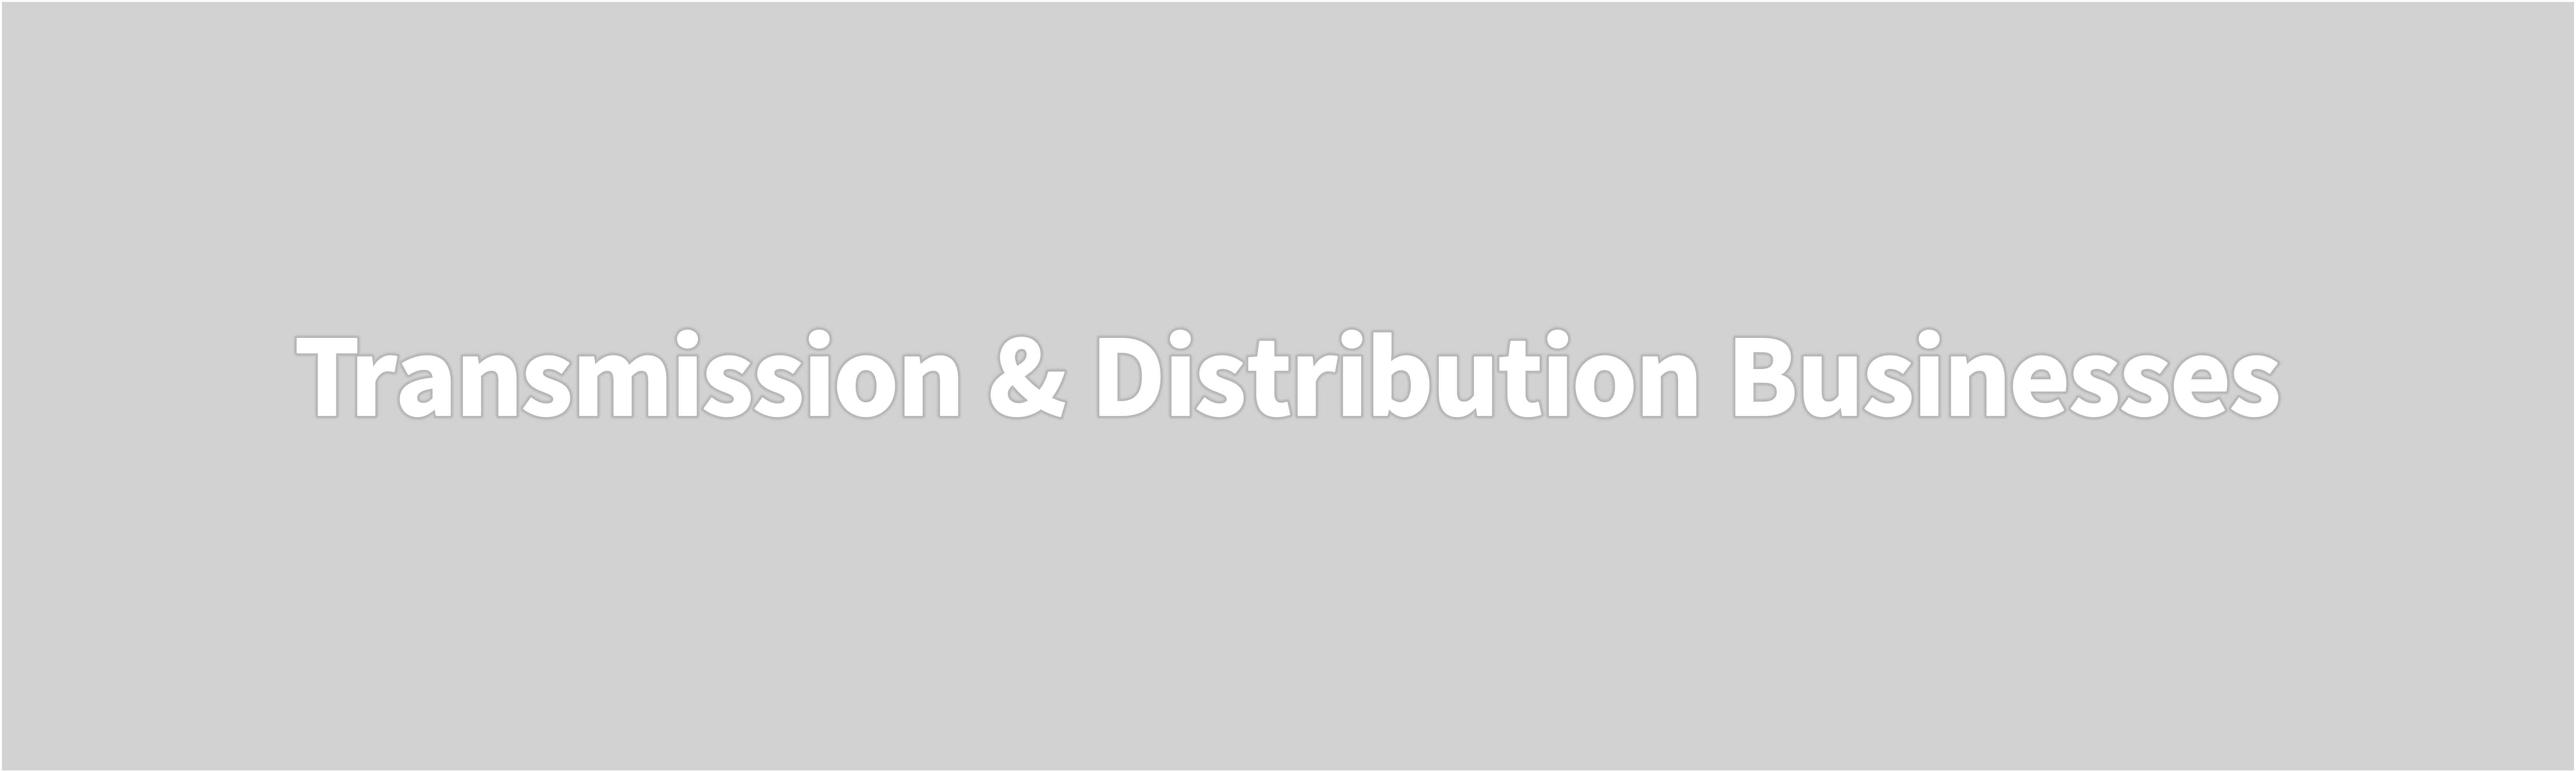 Transmission & Distribution Businesses